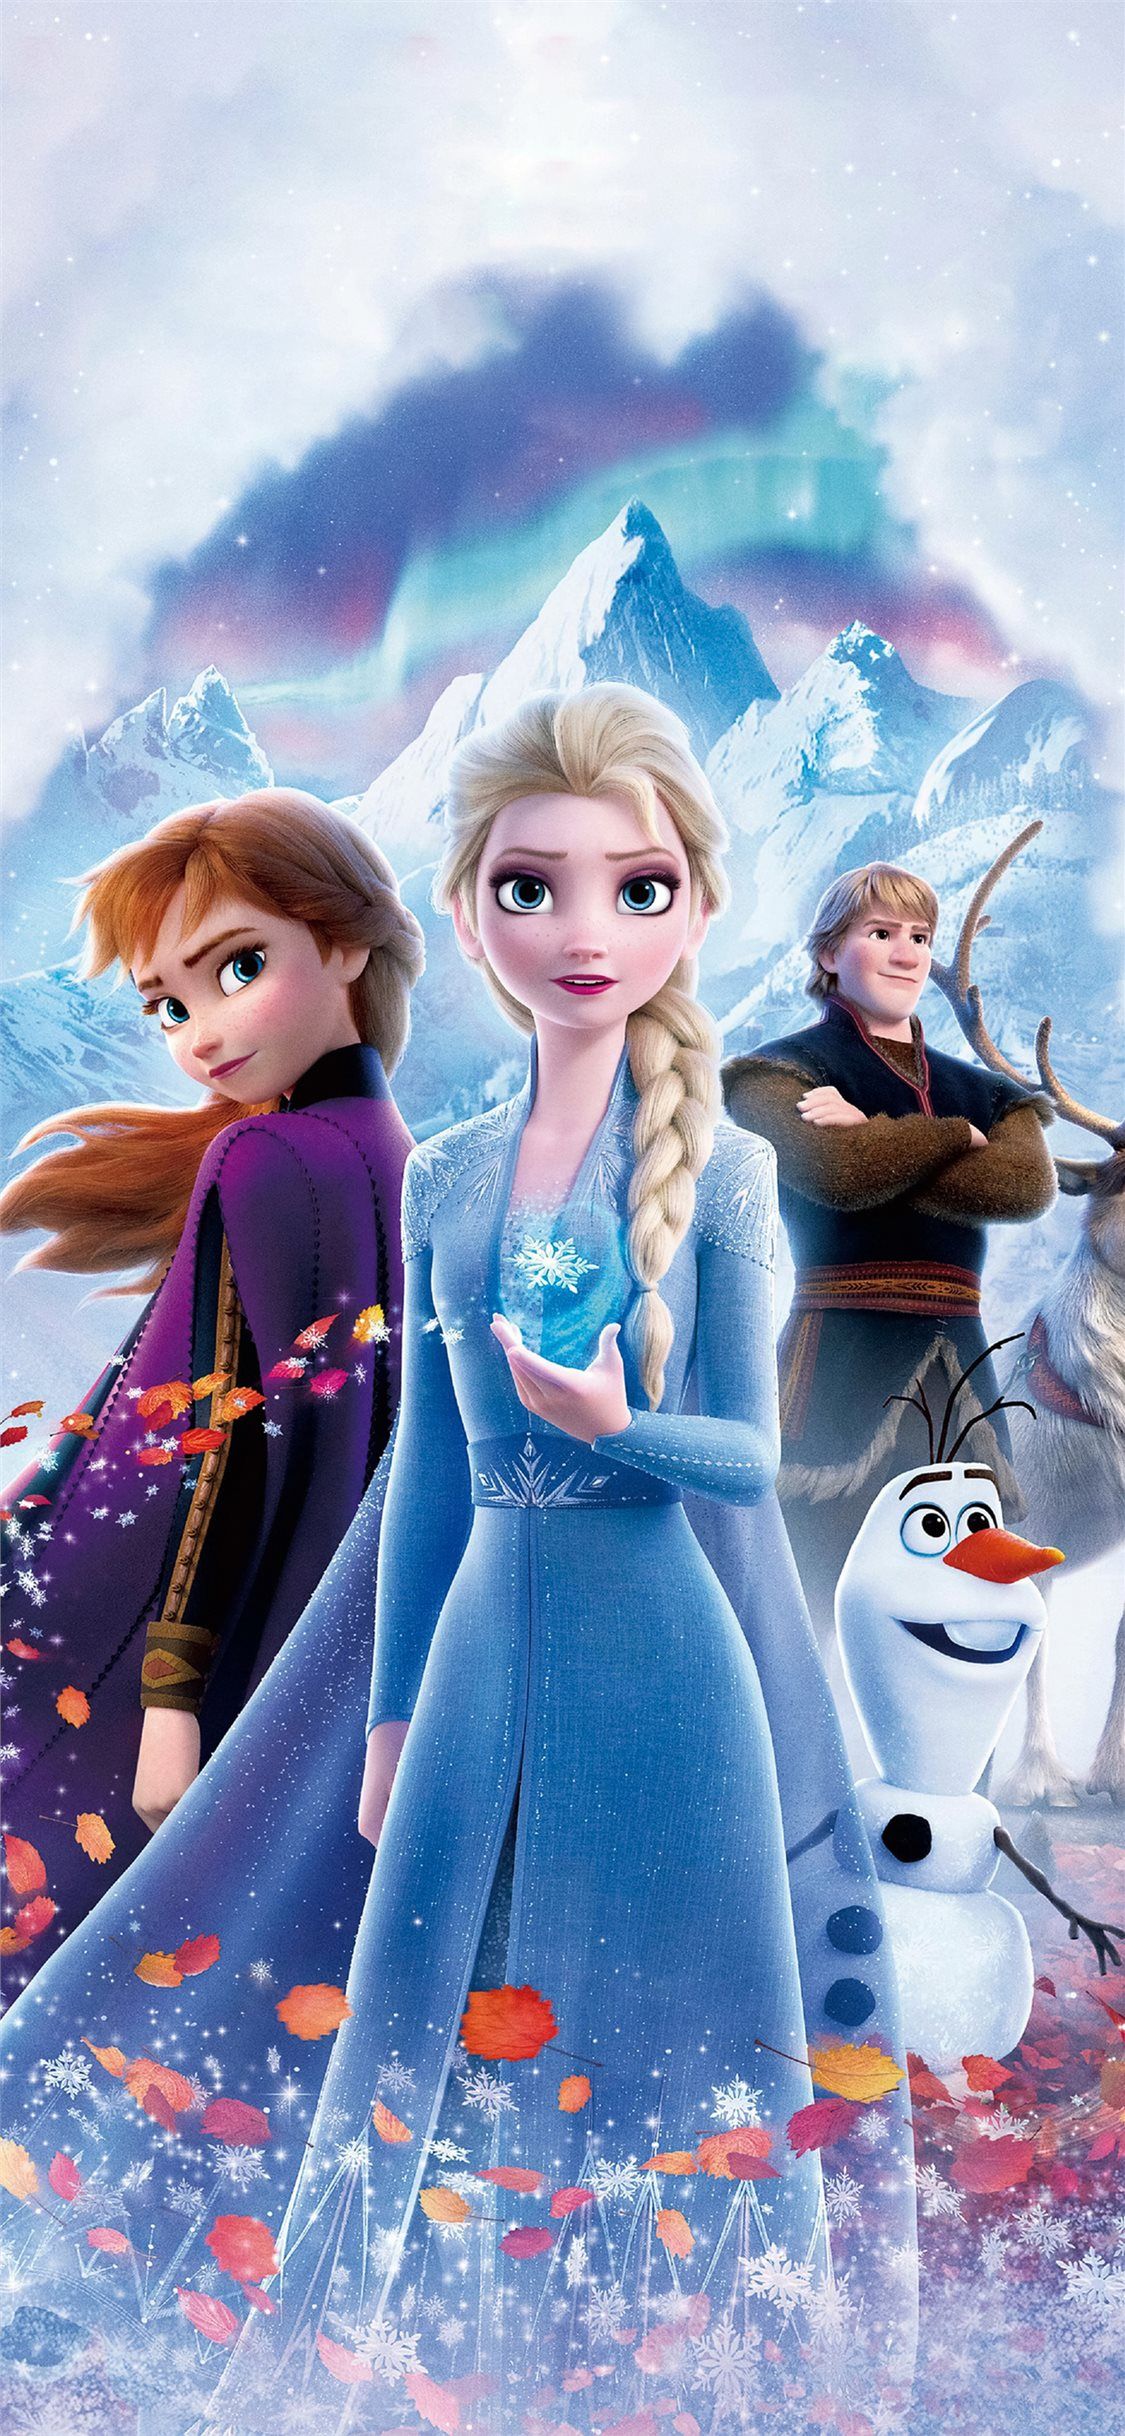 frozen 2 poster 4k. Frozen poster, Frozen wallpaper, Wallpaper iphone disney princess